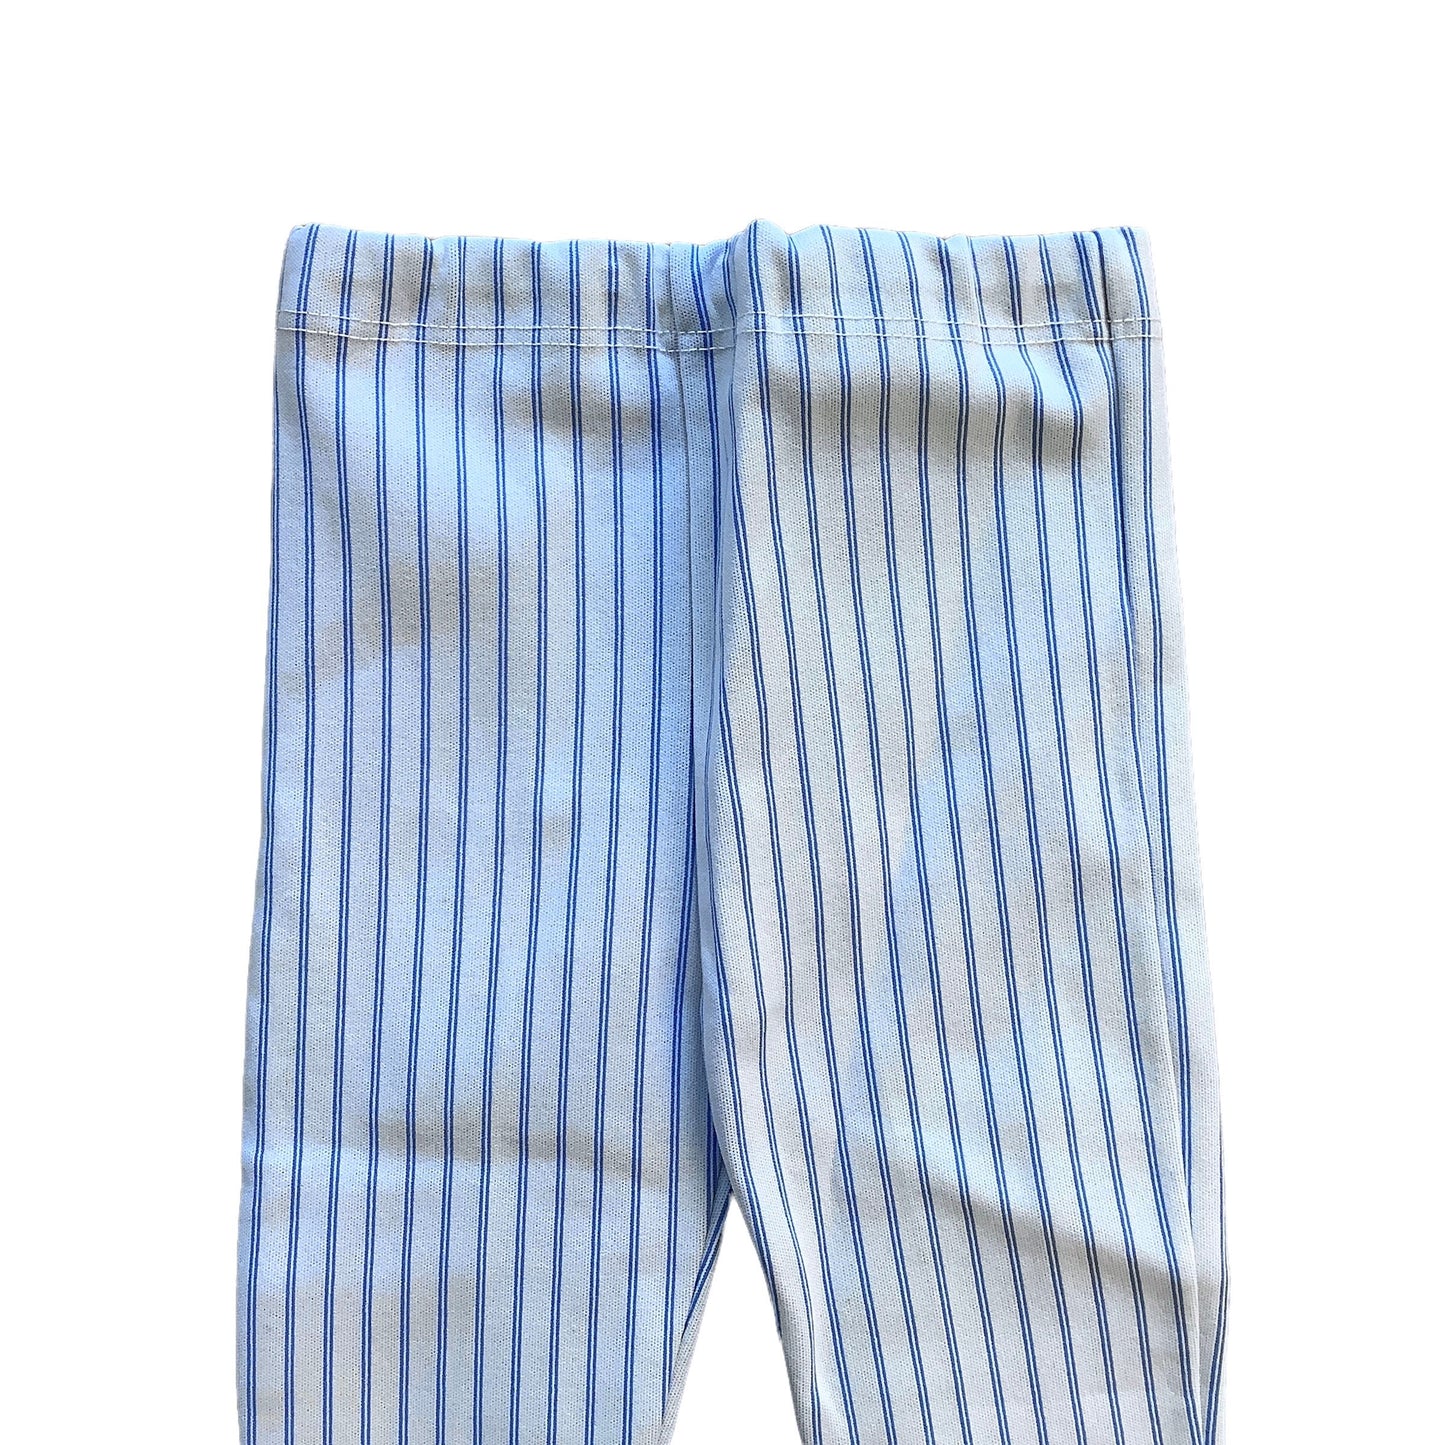 Vintage 70's Striped Blue Nylon Stirrup Leggings / 12-18M